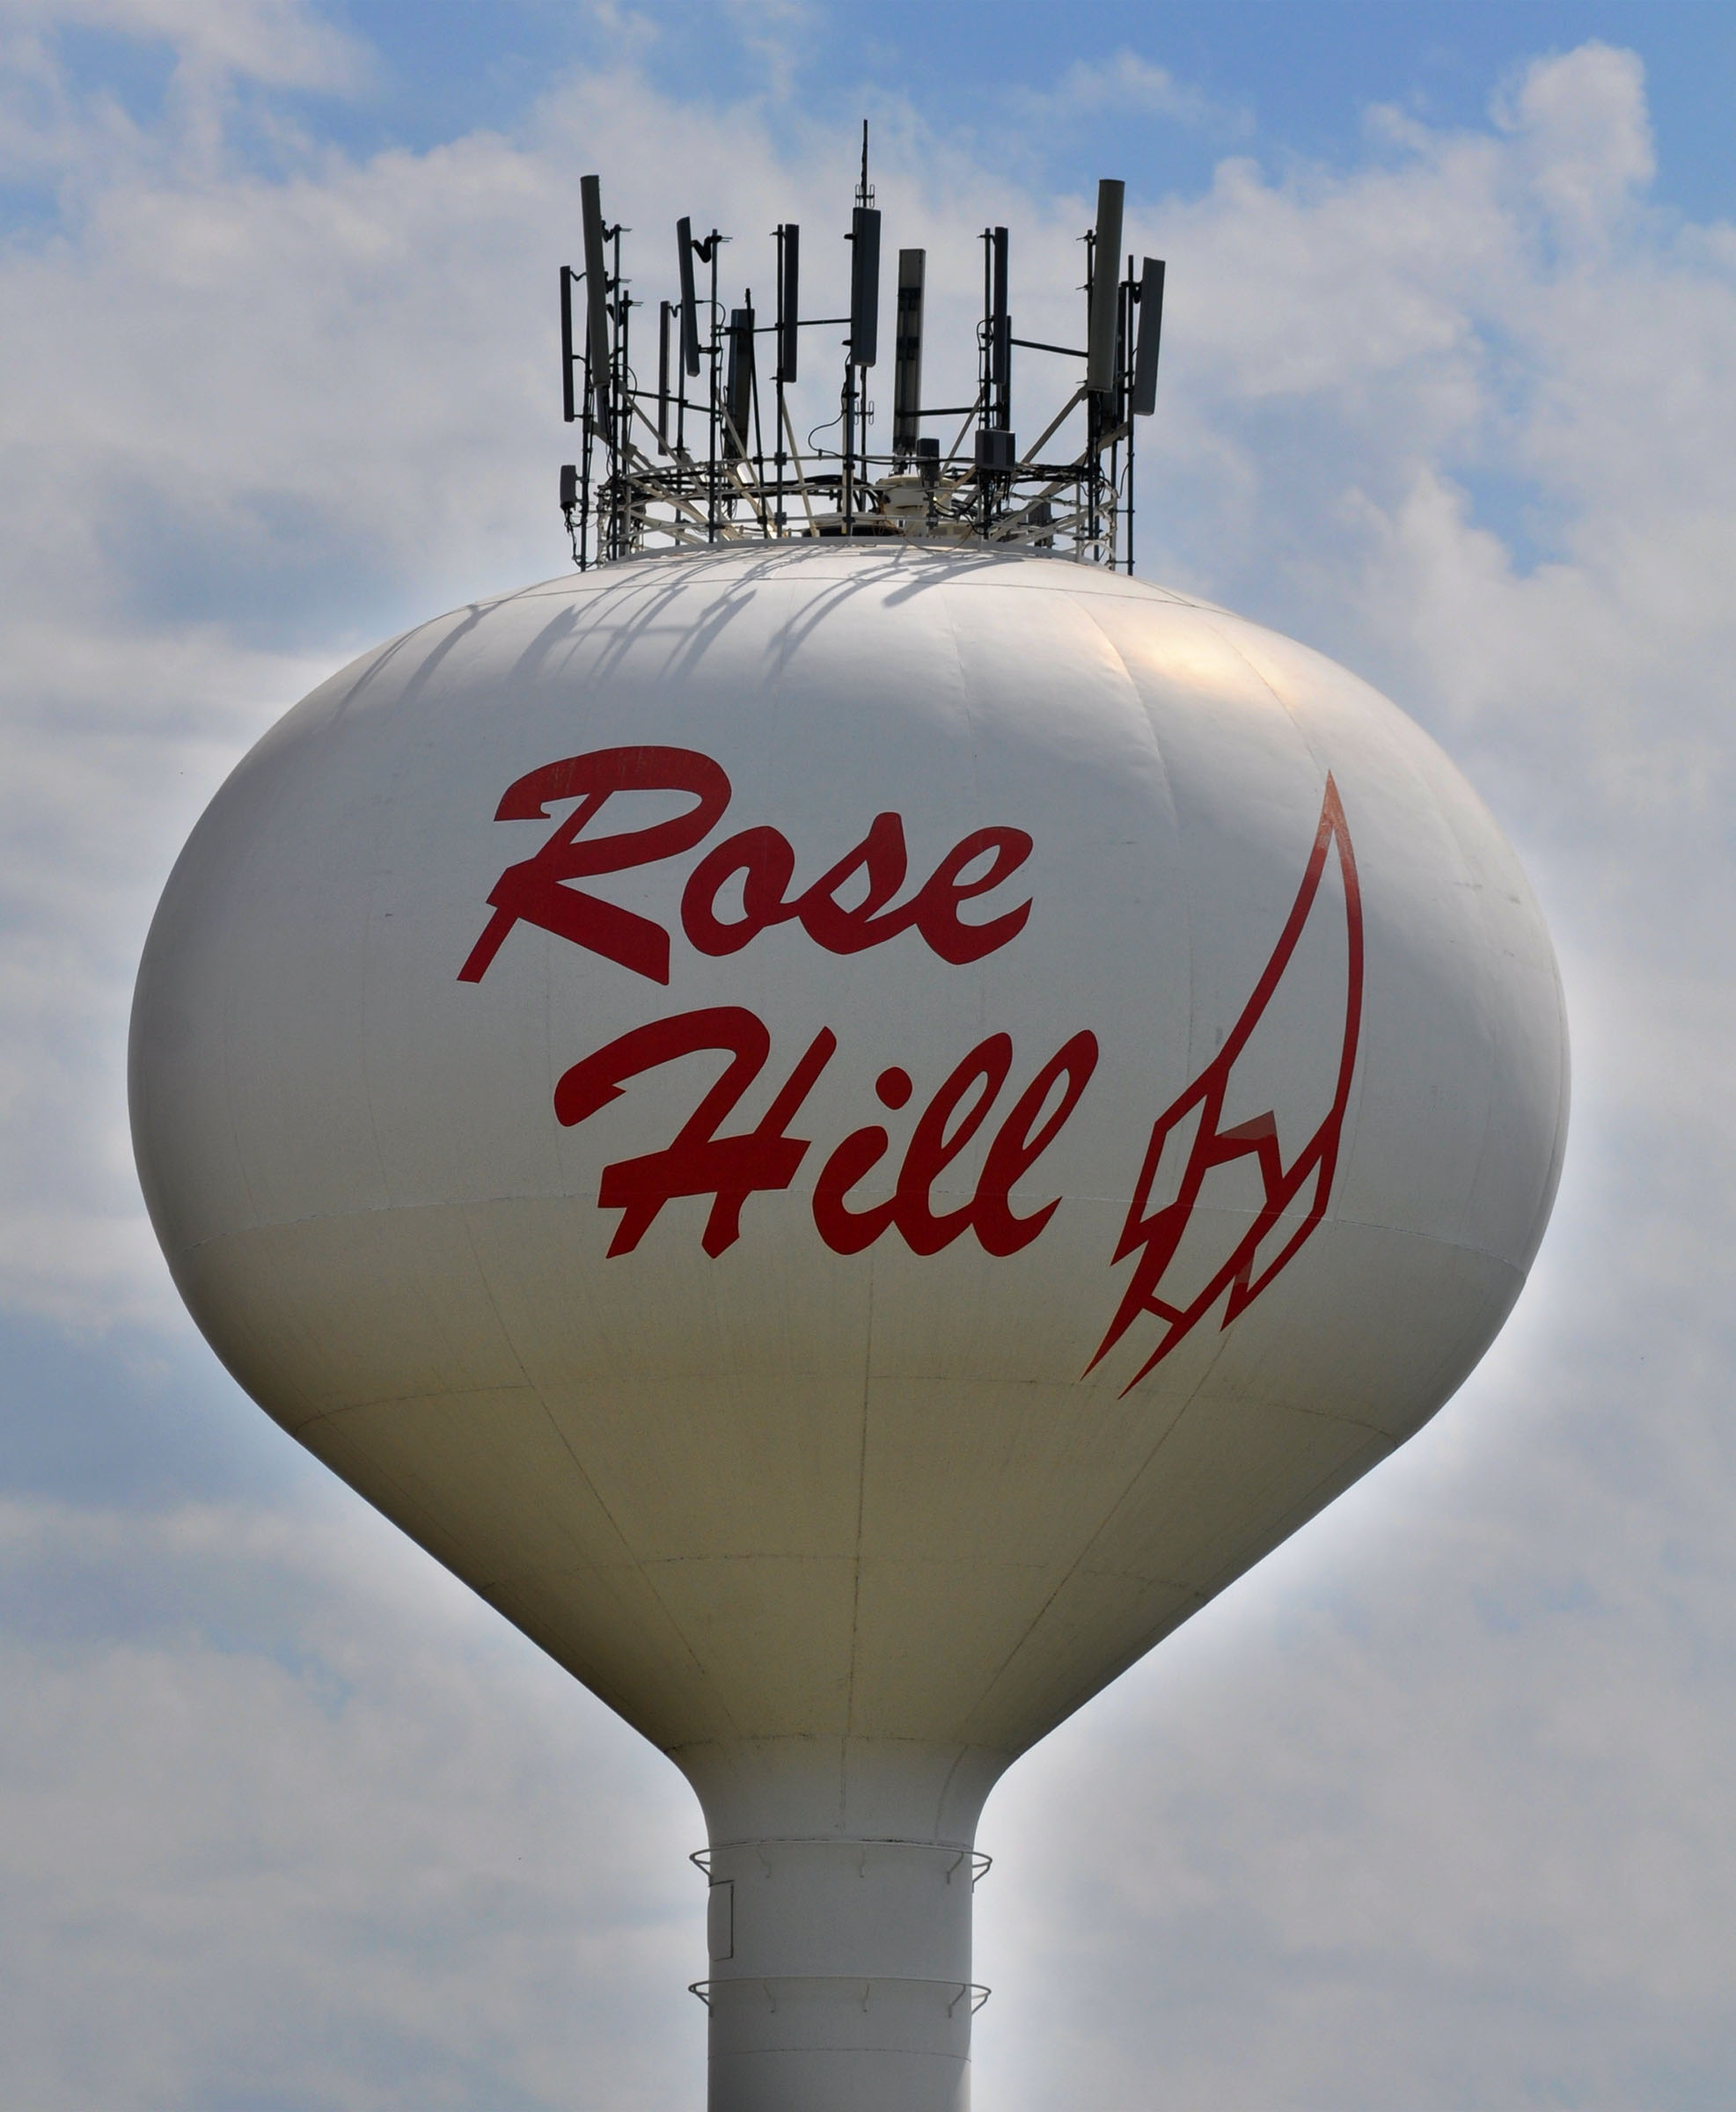 Rose Hill, Kansas